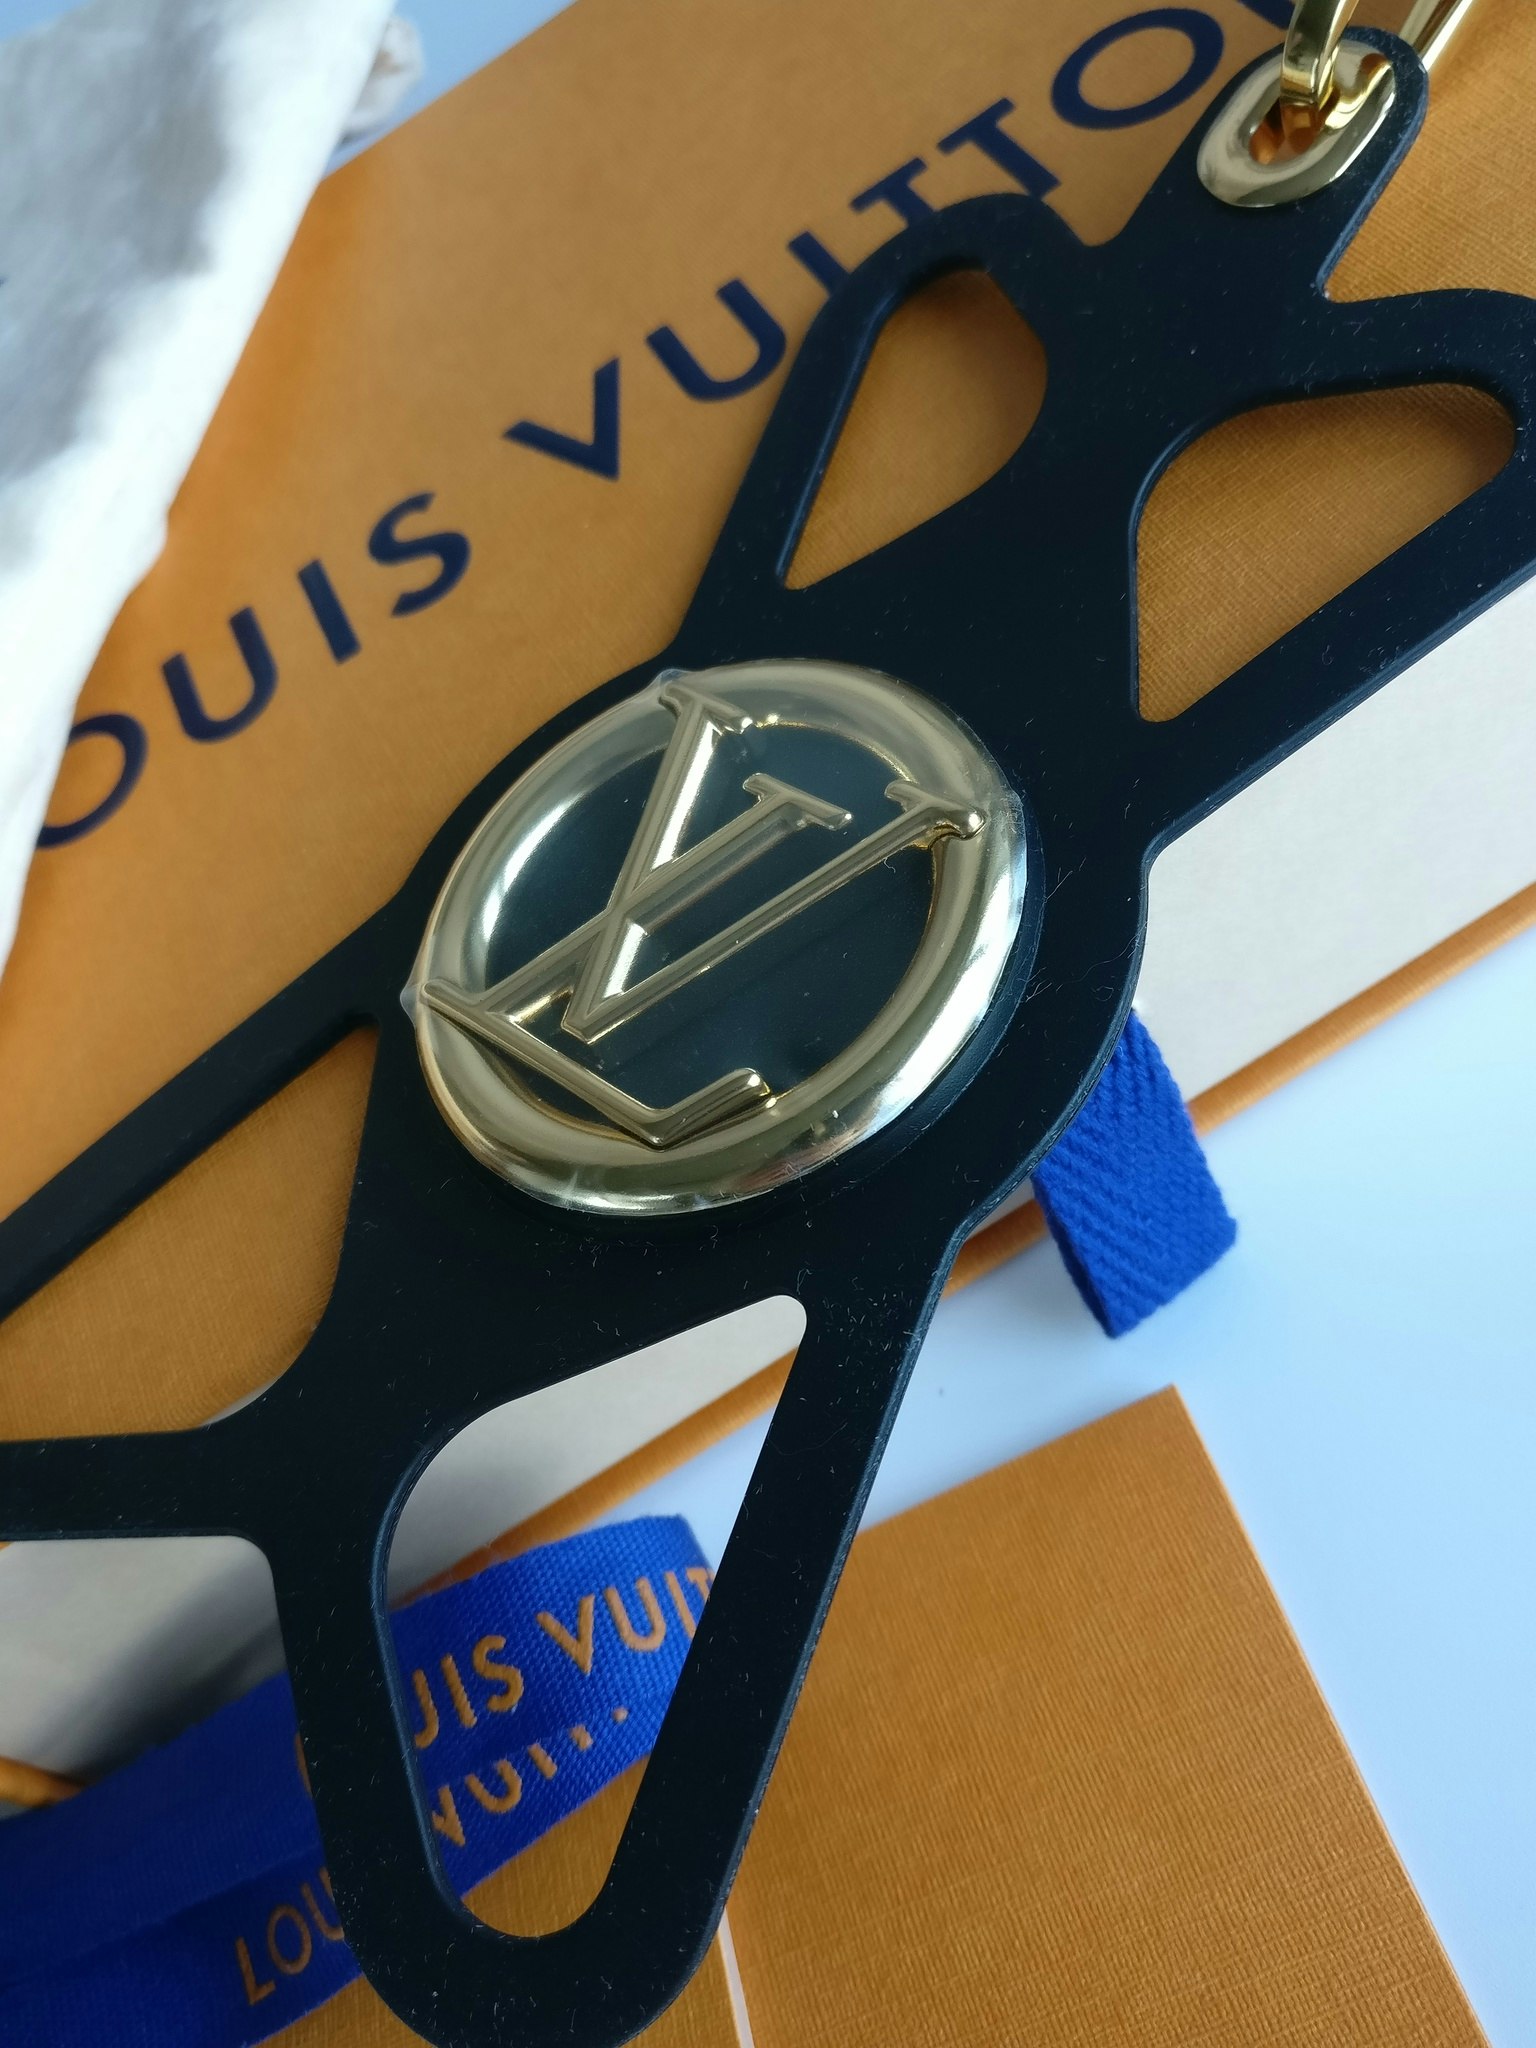 Louis Vuitton Monogram Phone Holder Louise Iphone Smartphone